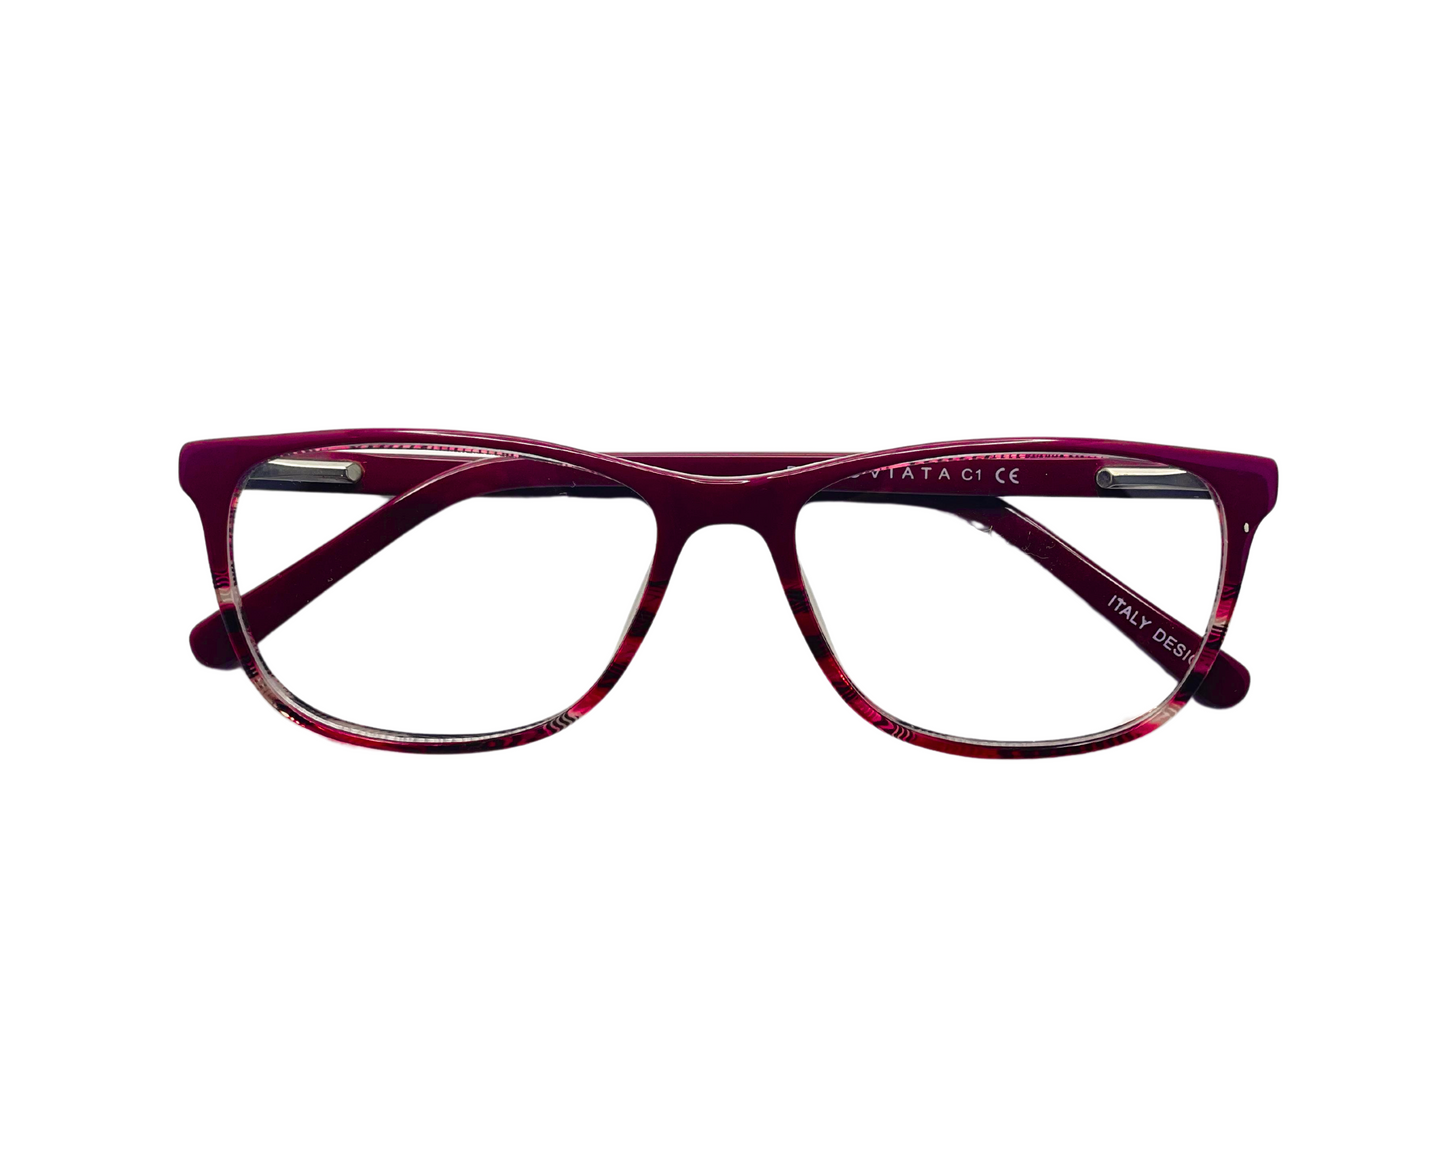 NS Classic - Gnetti - Red - Eyeglasses